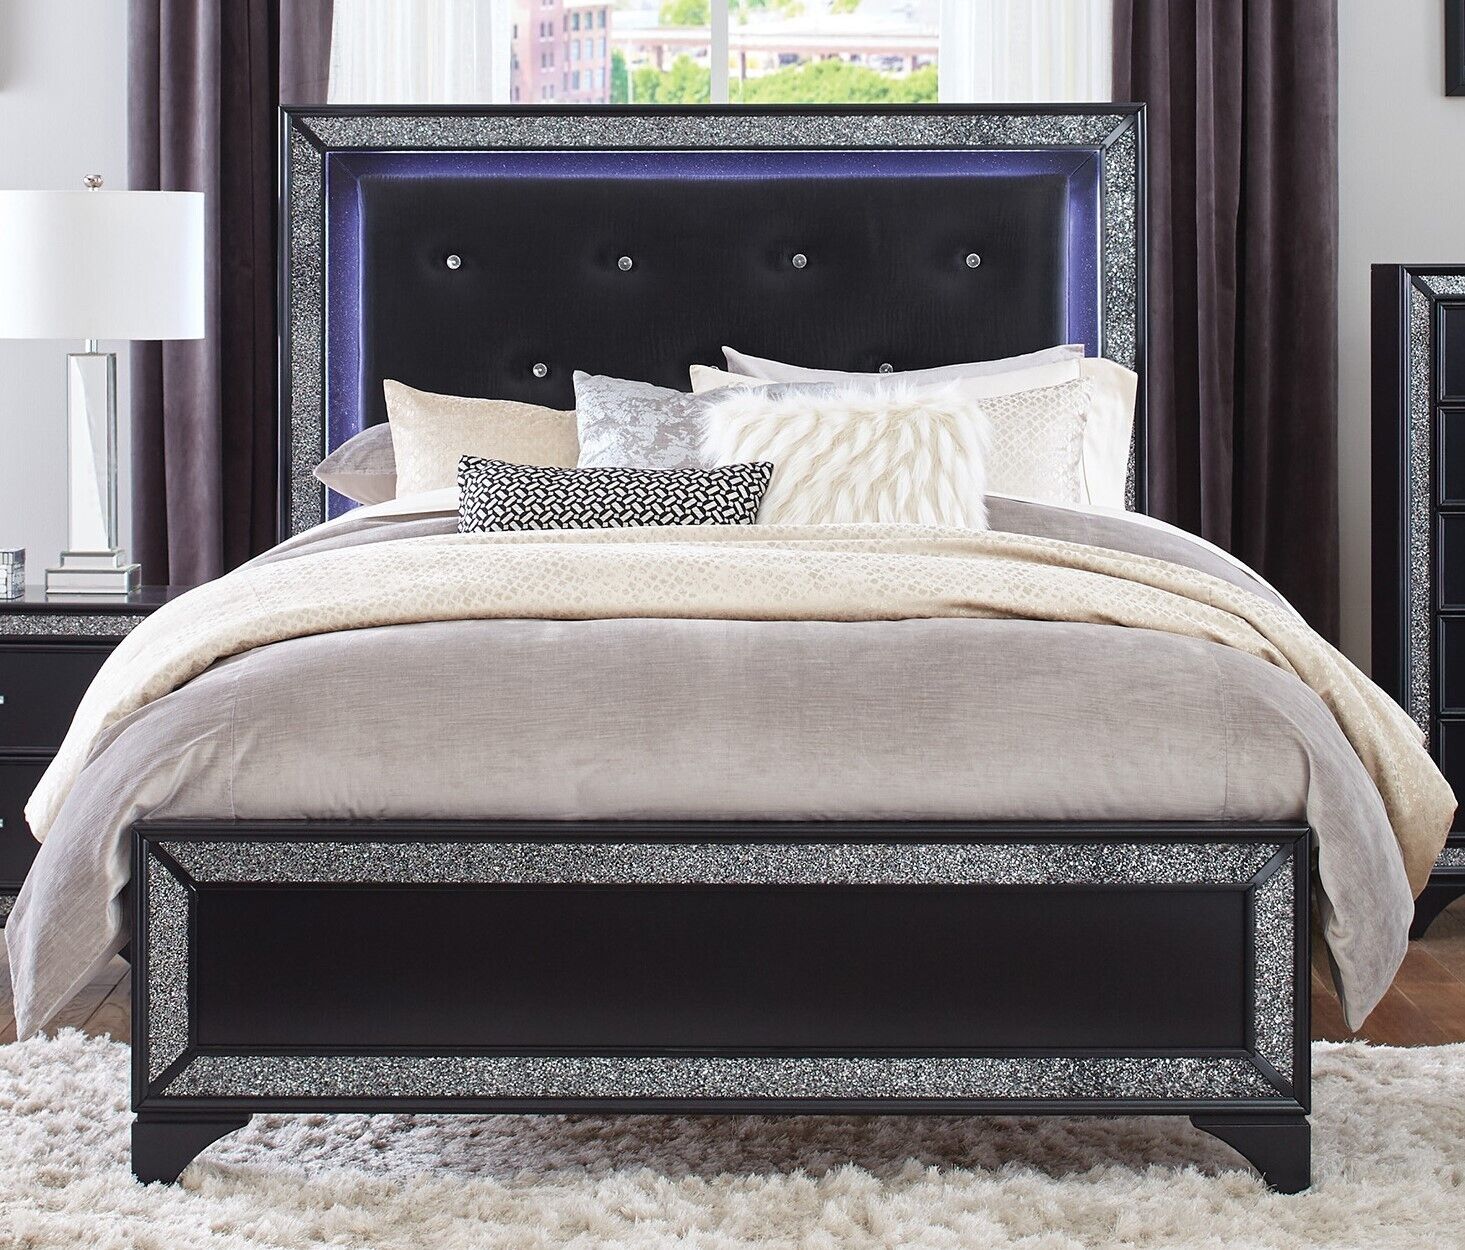 Esofastore Modern Bedroom 3pc Set LED Headboard King Bed Button-Tufted Headboard Nightstands Pearl Black Metallic Finish